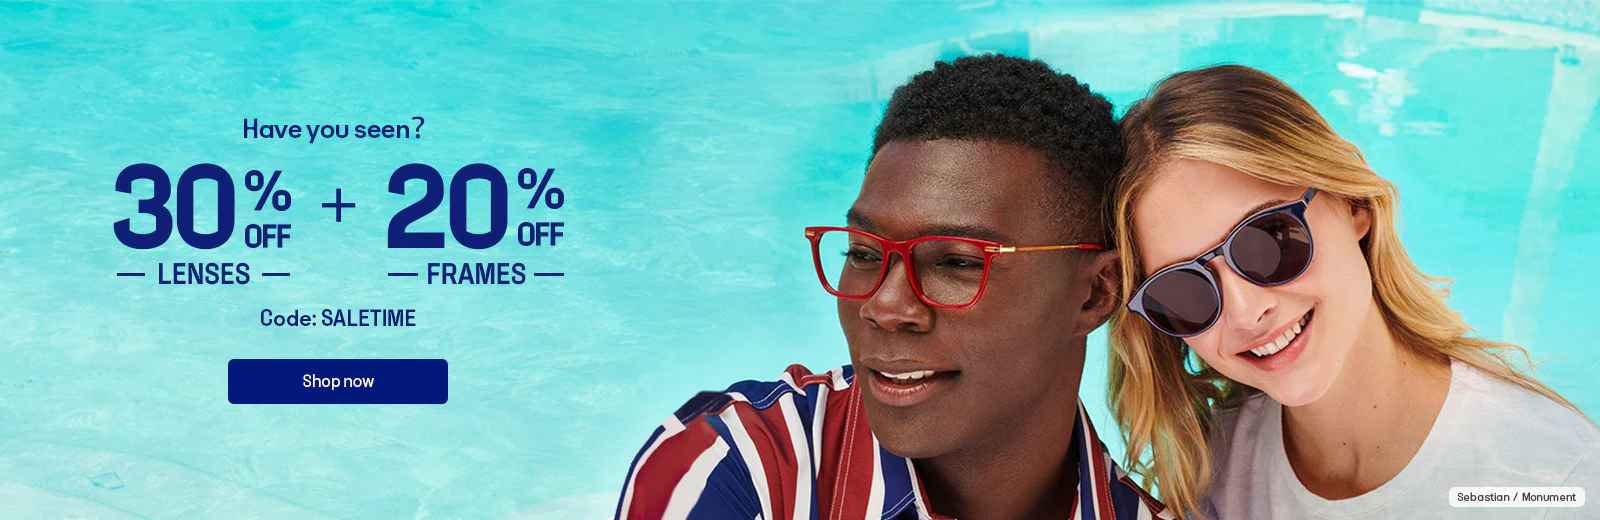 30% OFF on lenses & 20% OFF on frames at Eye Buy Direct